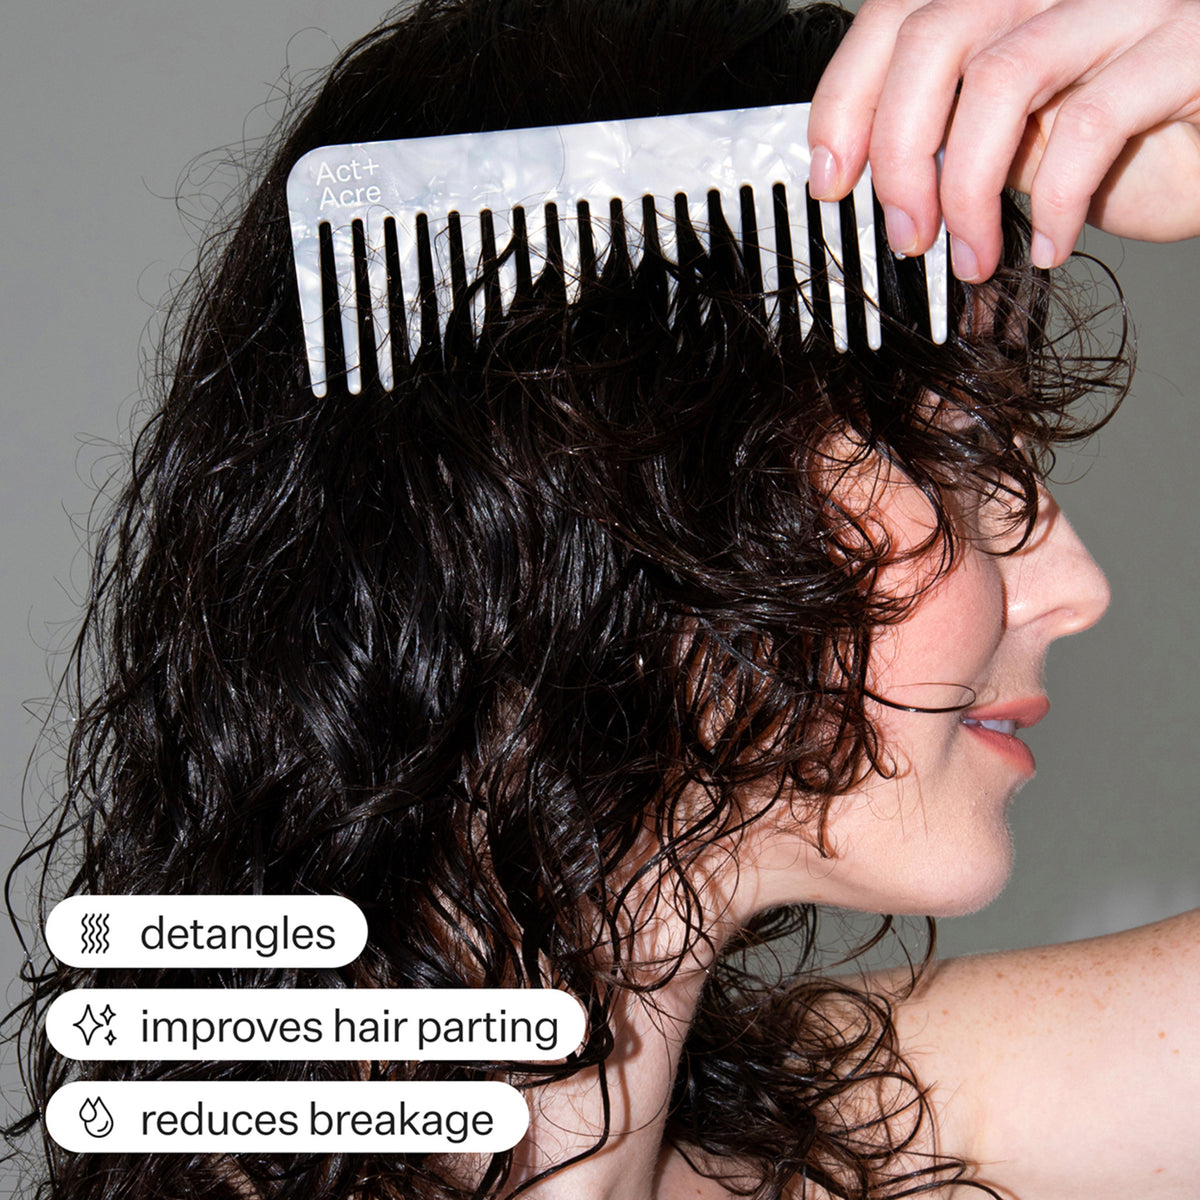 Act+Acre Detangling Hair Comb .